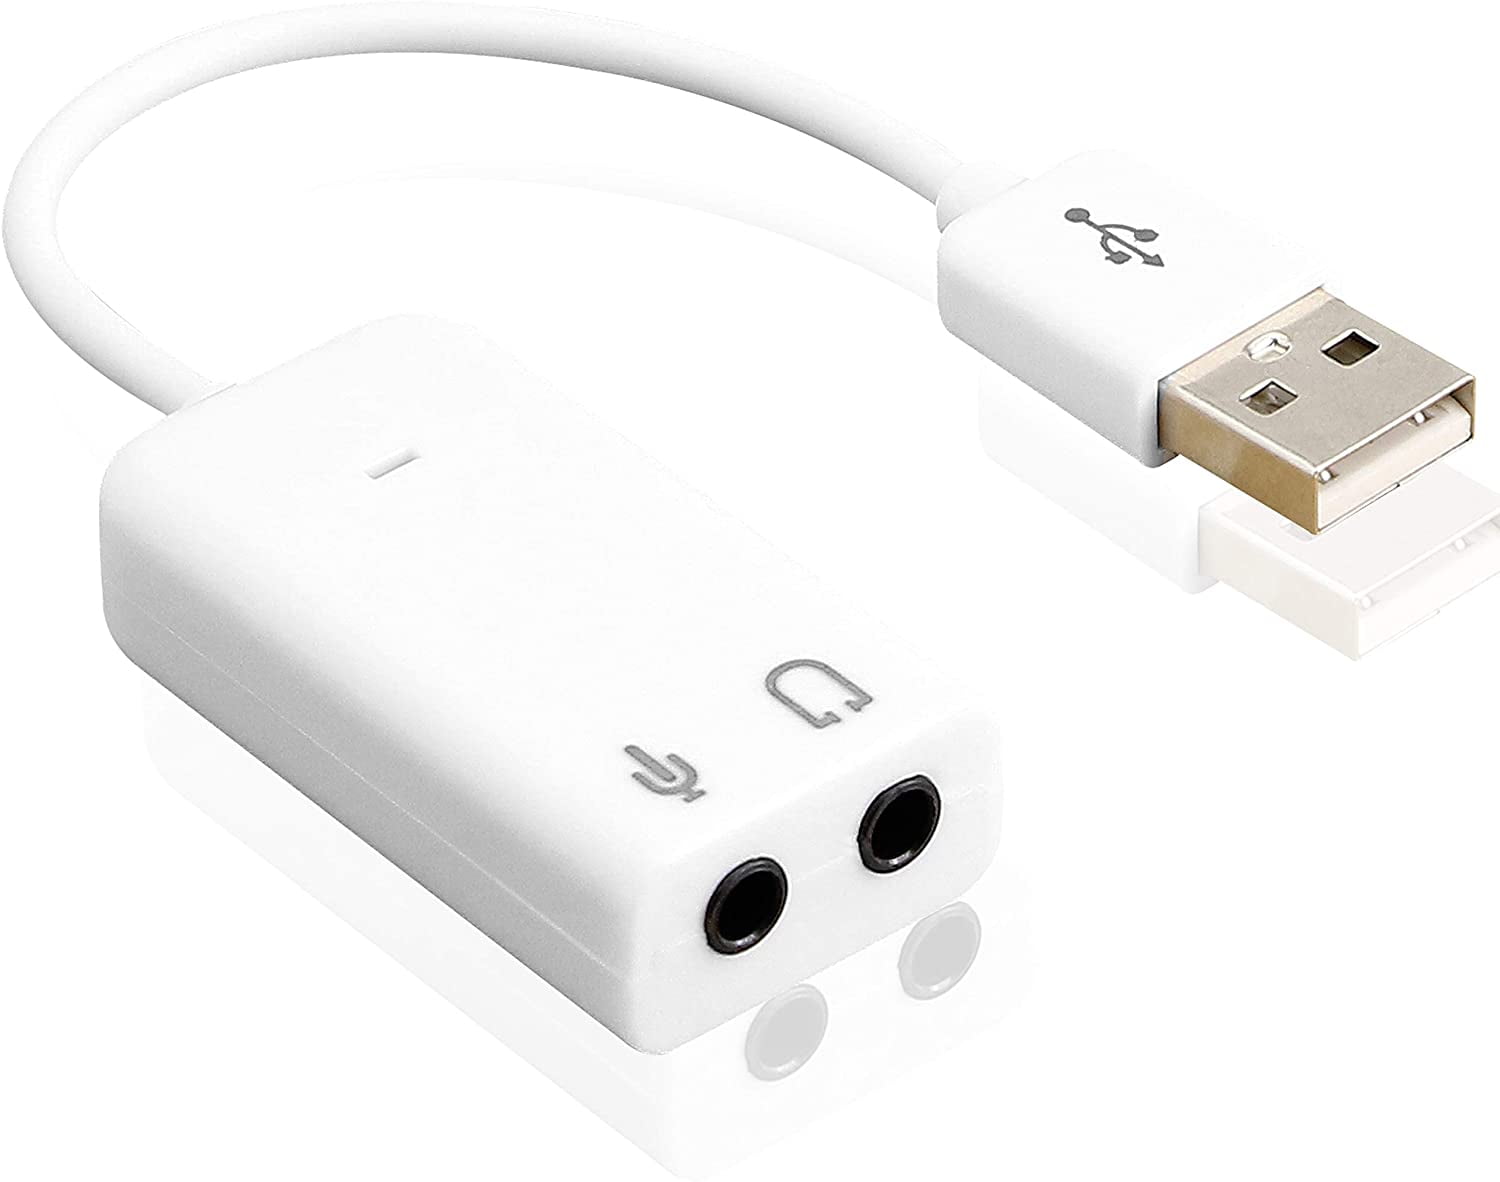 gracht Aanleg Twee graden 7.1 USB External Sound Card Audio Adapter LEIHONG USB2.0 to 3.5MM Audio  Output Microphone Input Converter Plug and Play for  Windows/Vista/Win7/Linux/WinCE/Android/Mac-White - Walmart.com